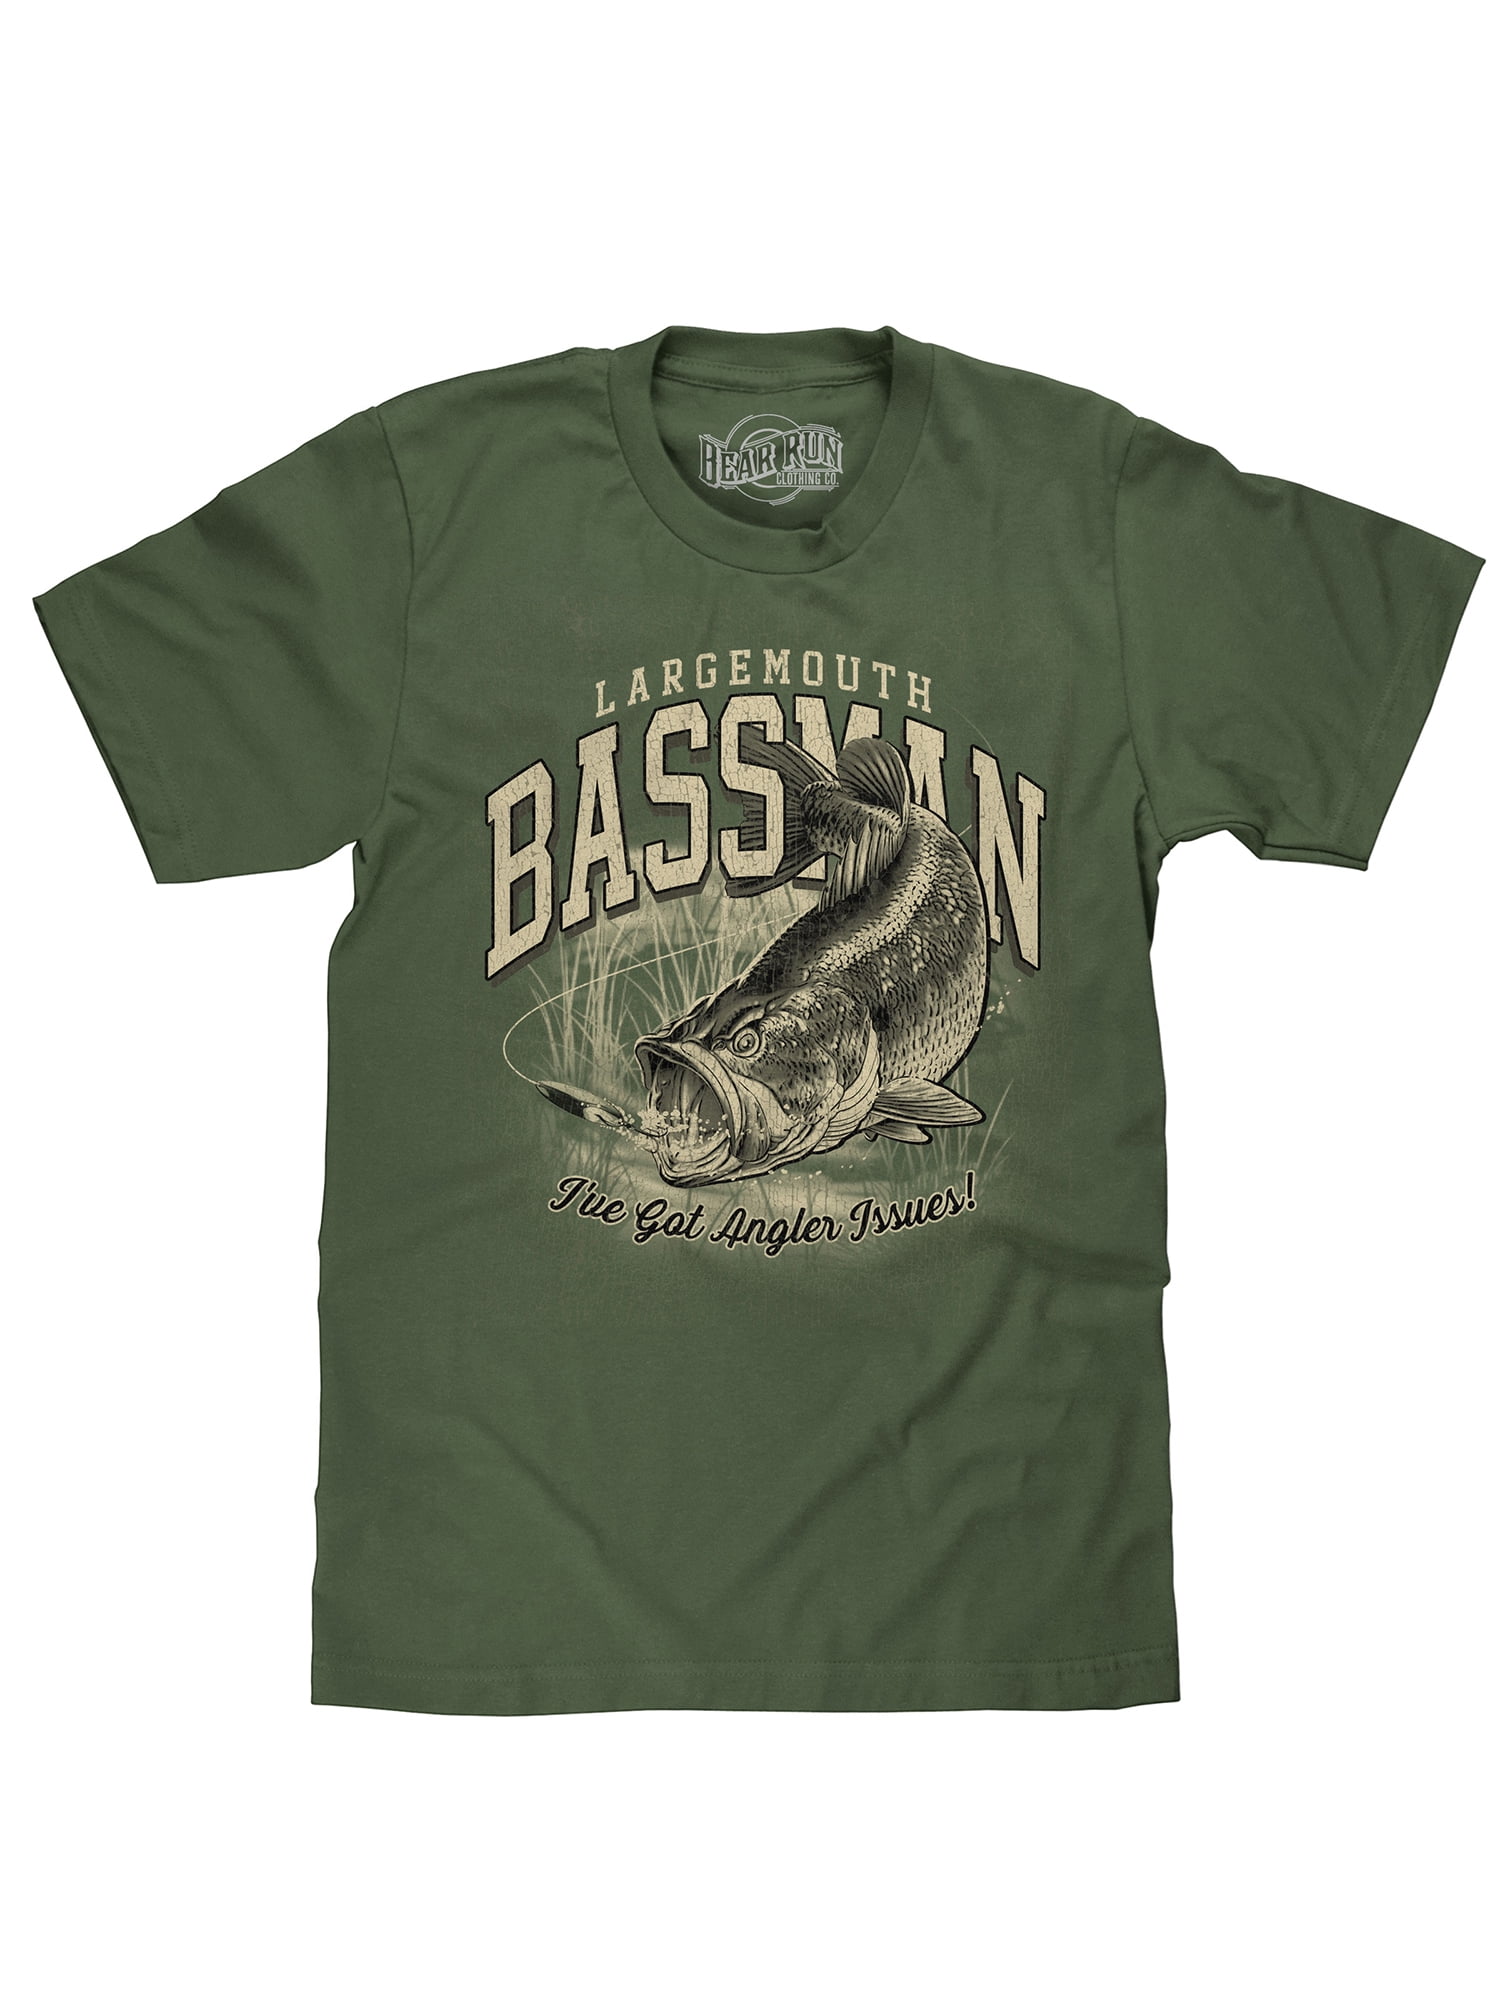 Bear Run Clothing Co. Men's Largemouth Bassman Angler Issues